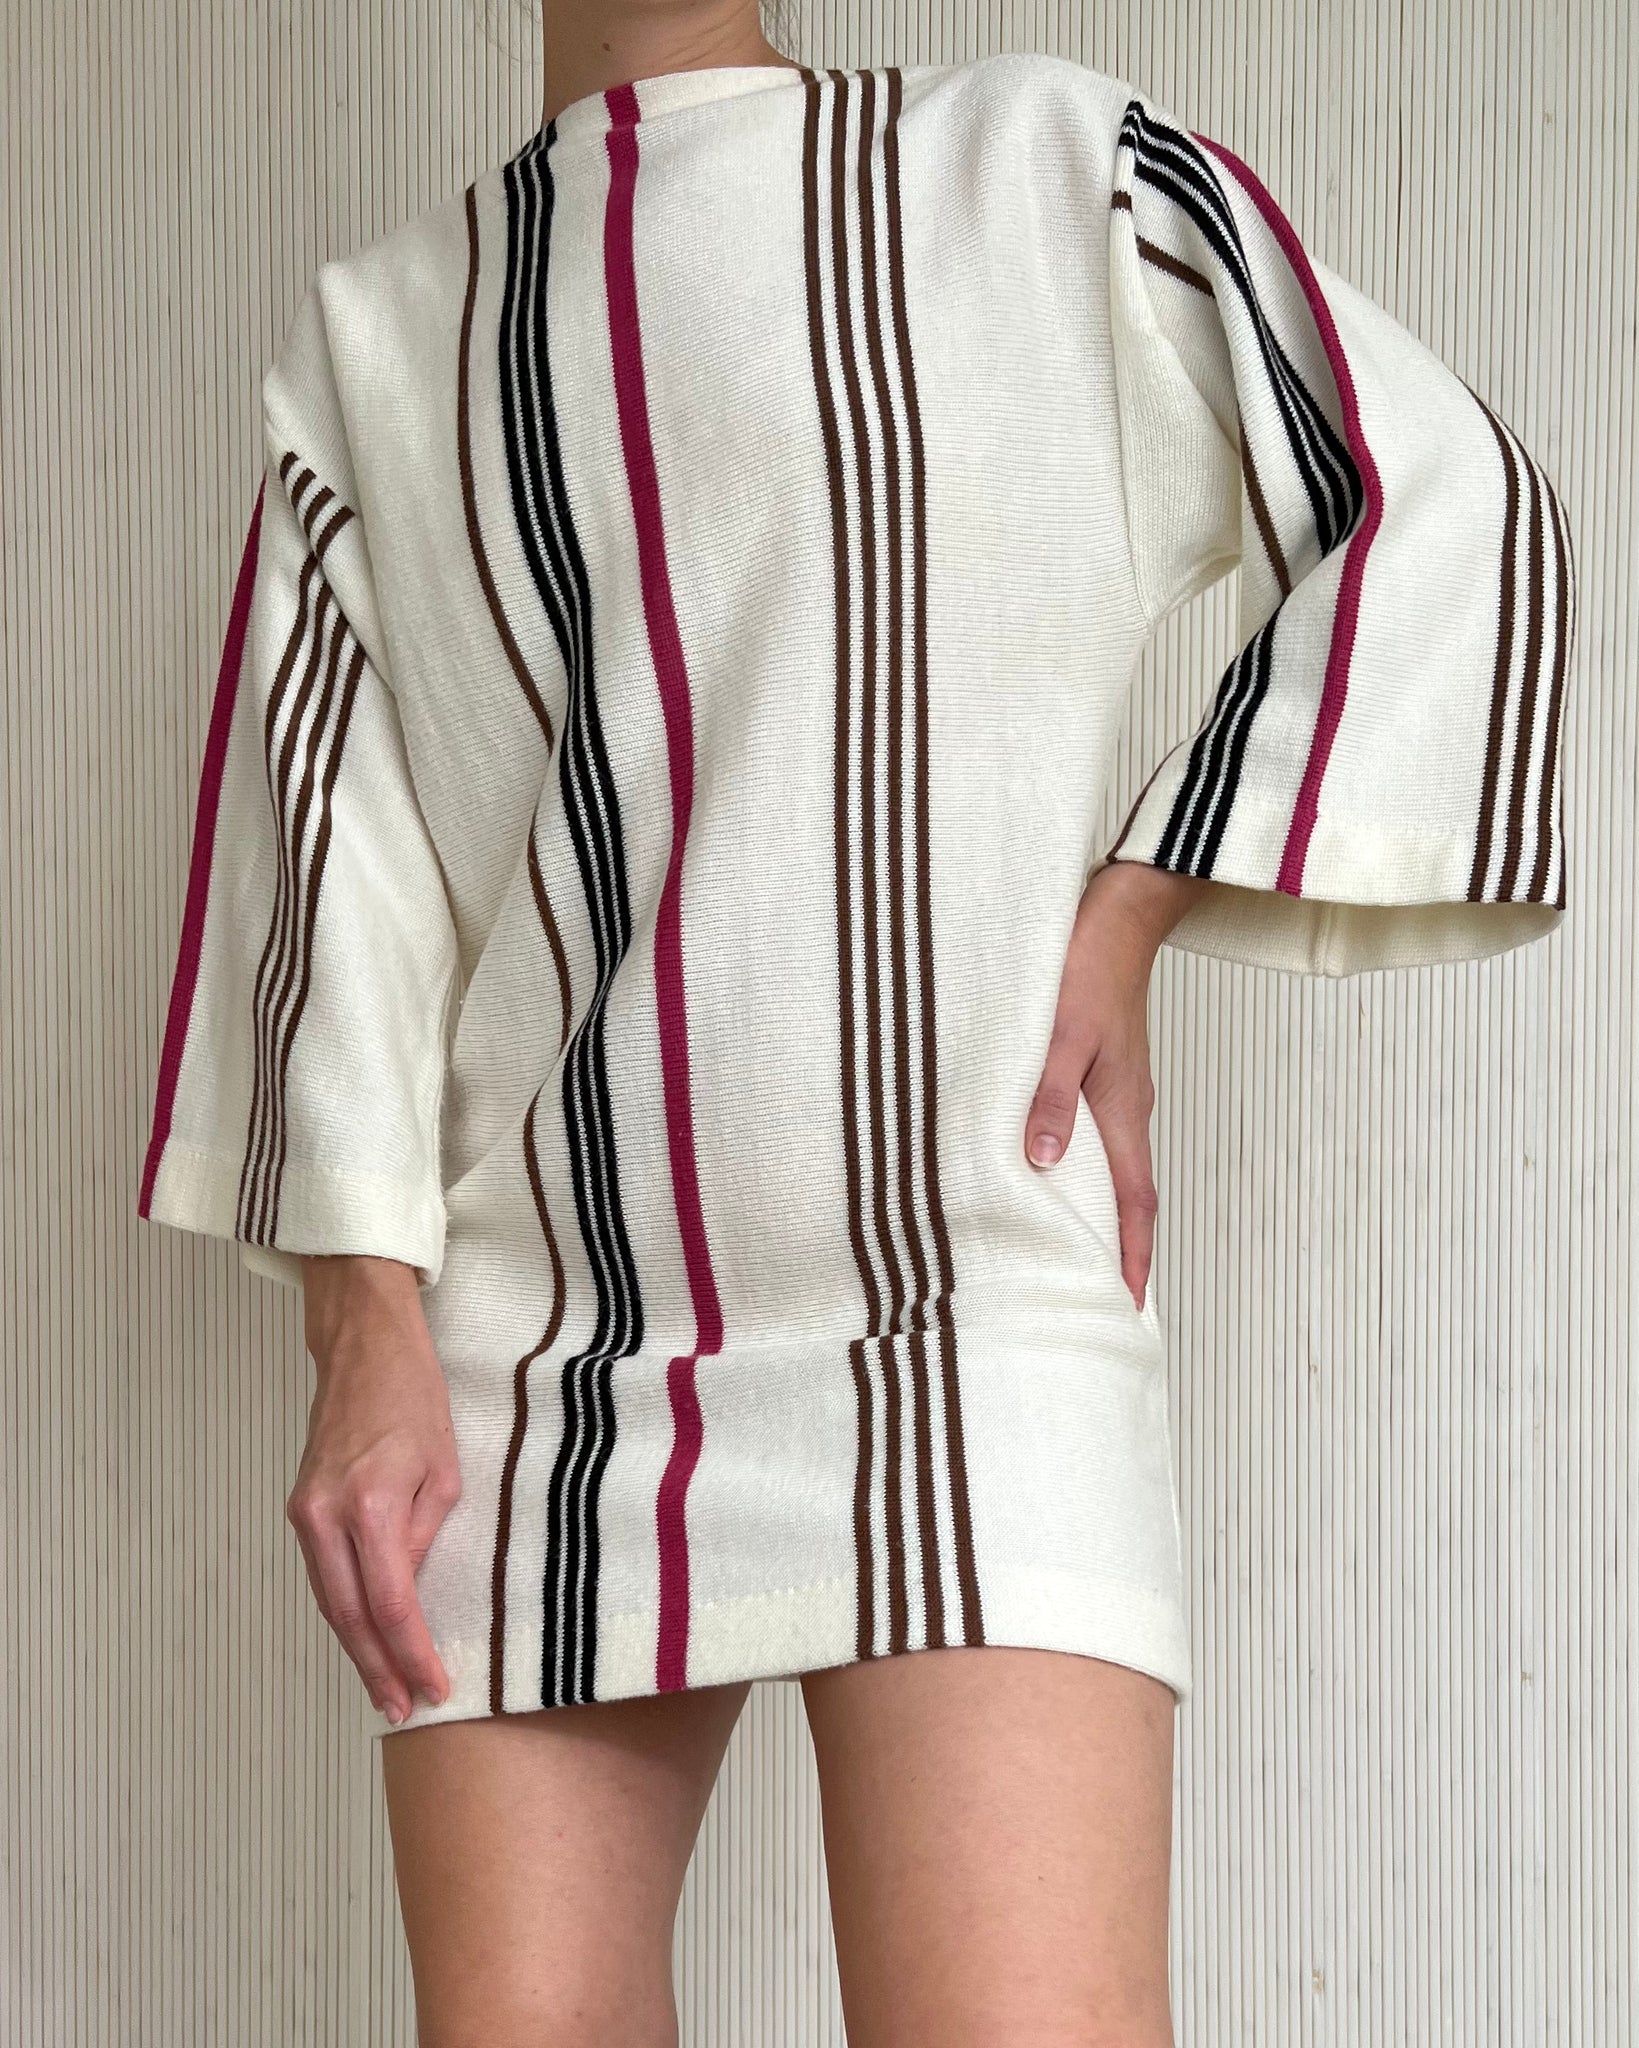 70s Striped Tunic Sweater (Fits XS/S)